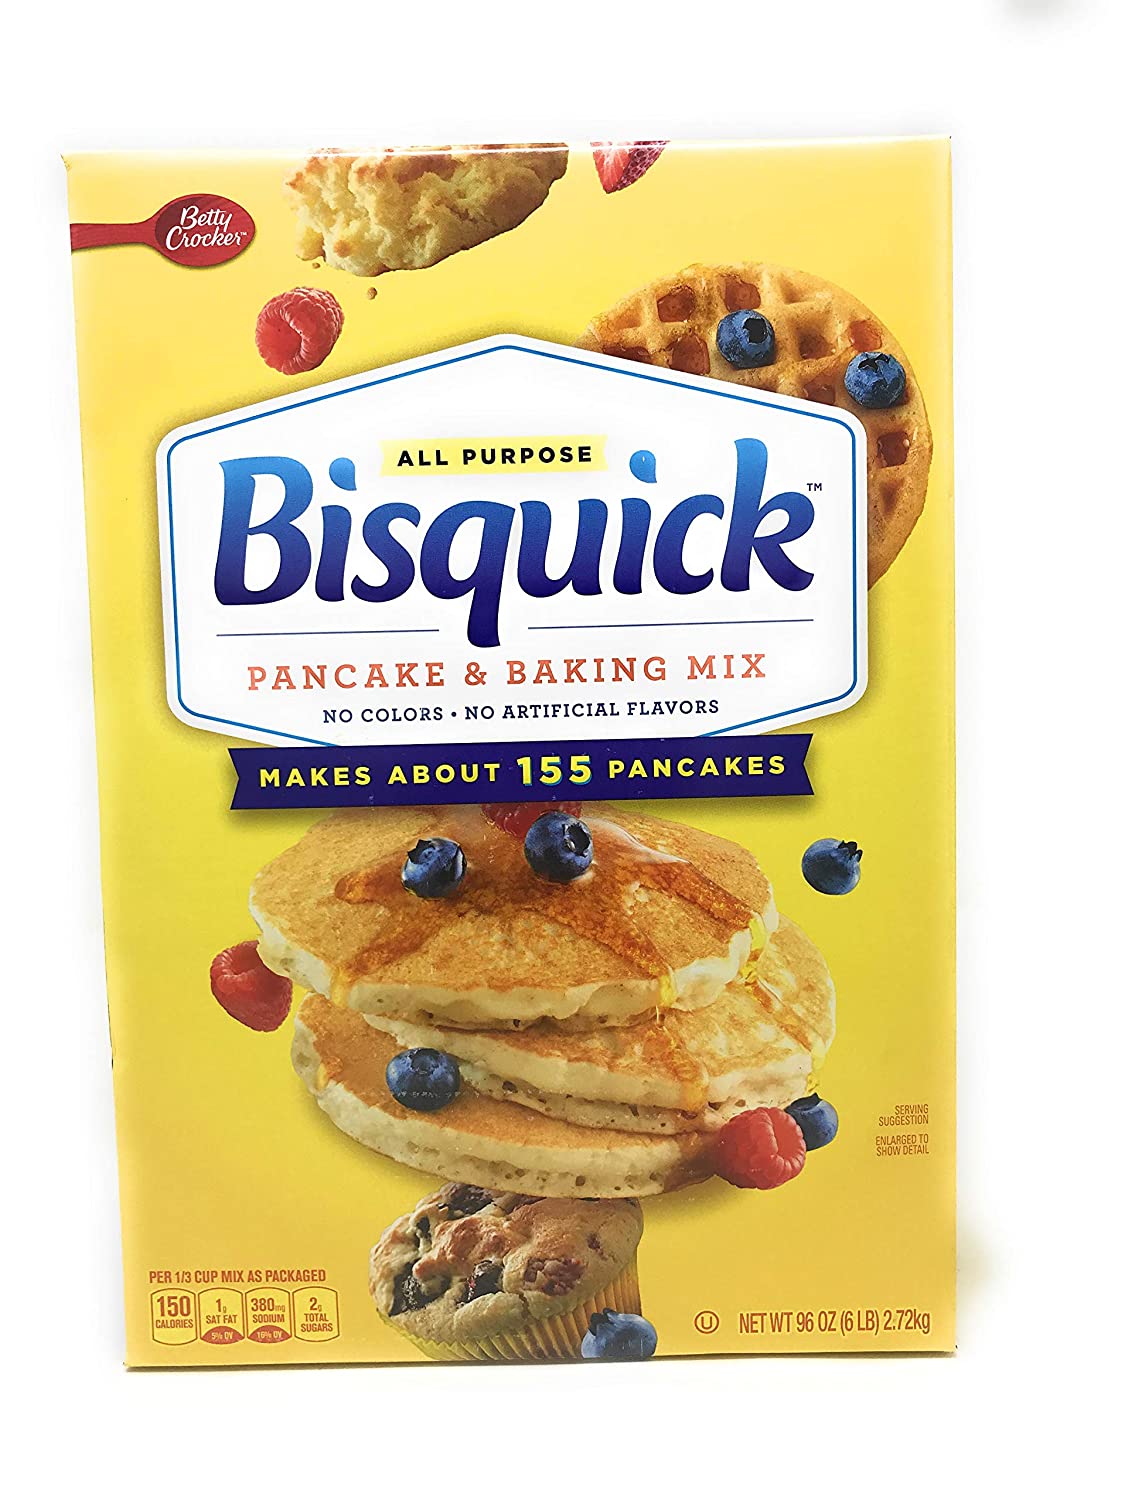 Betty Crocker Bisquick Pancake and Baking Mix
